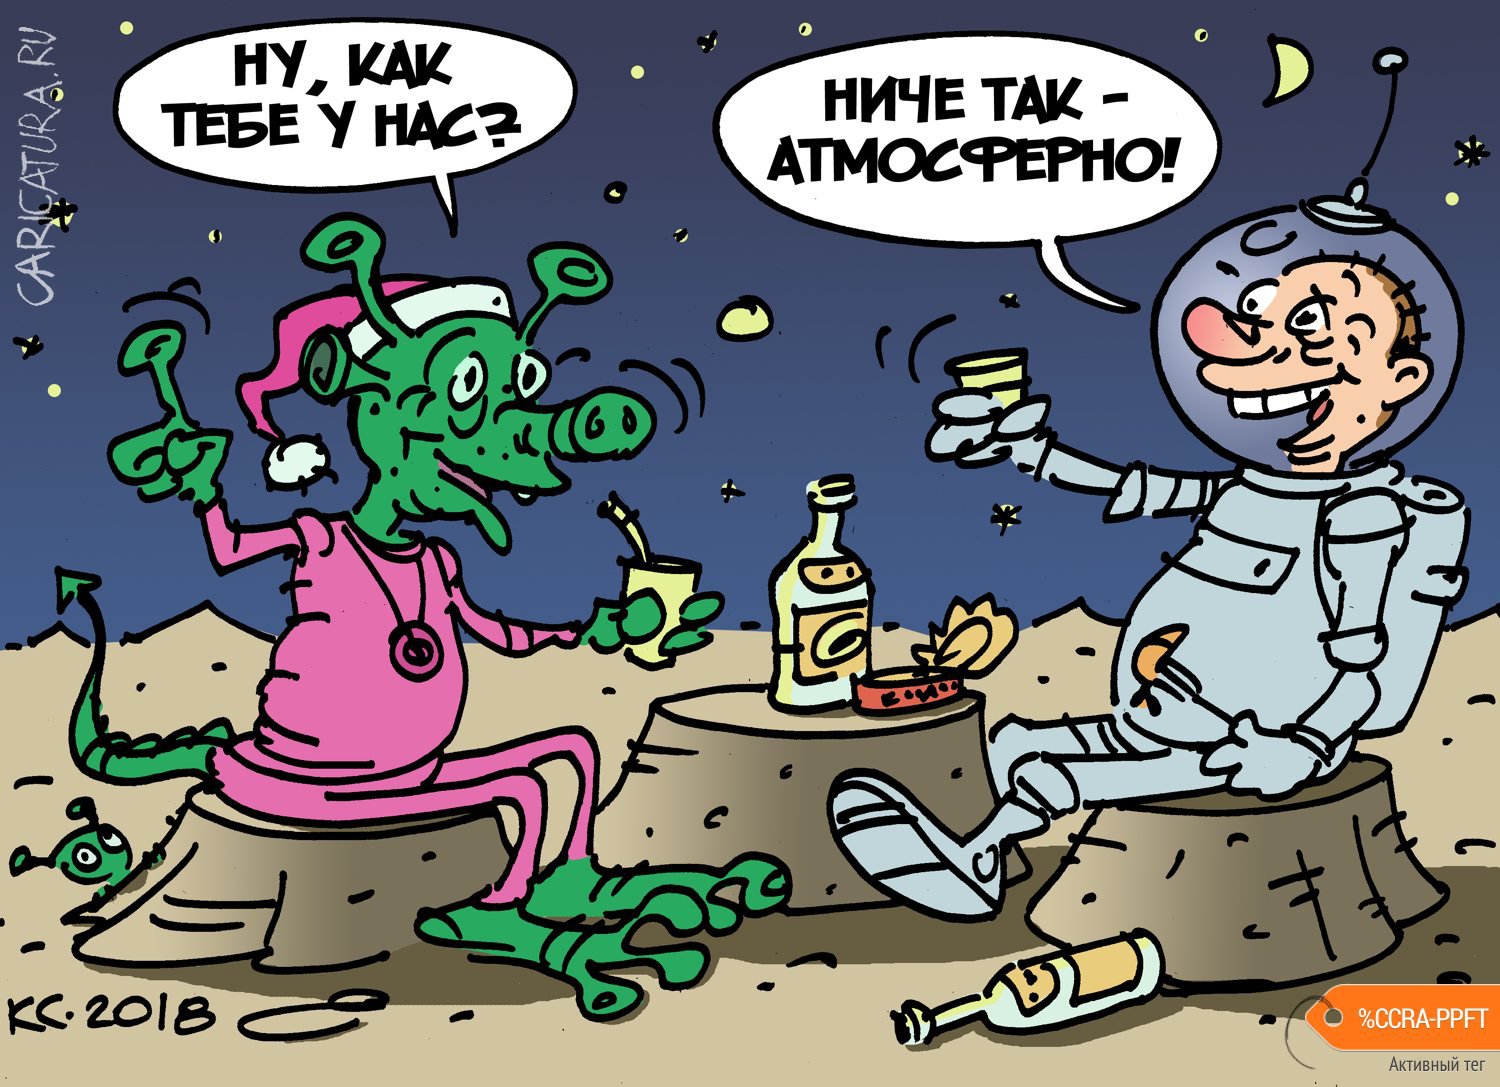 Карикатура "Хорошо сидим!", Вячеслав Капрельянц